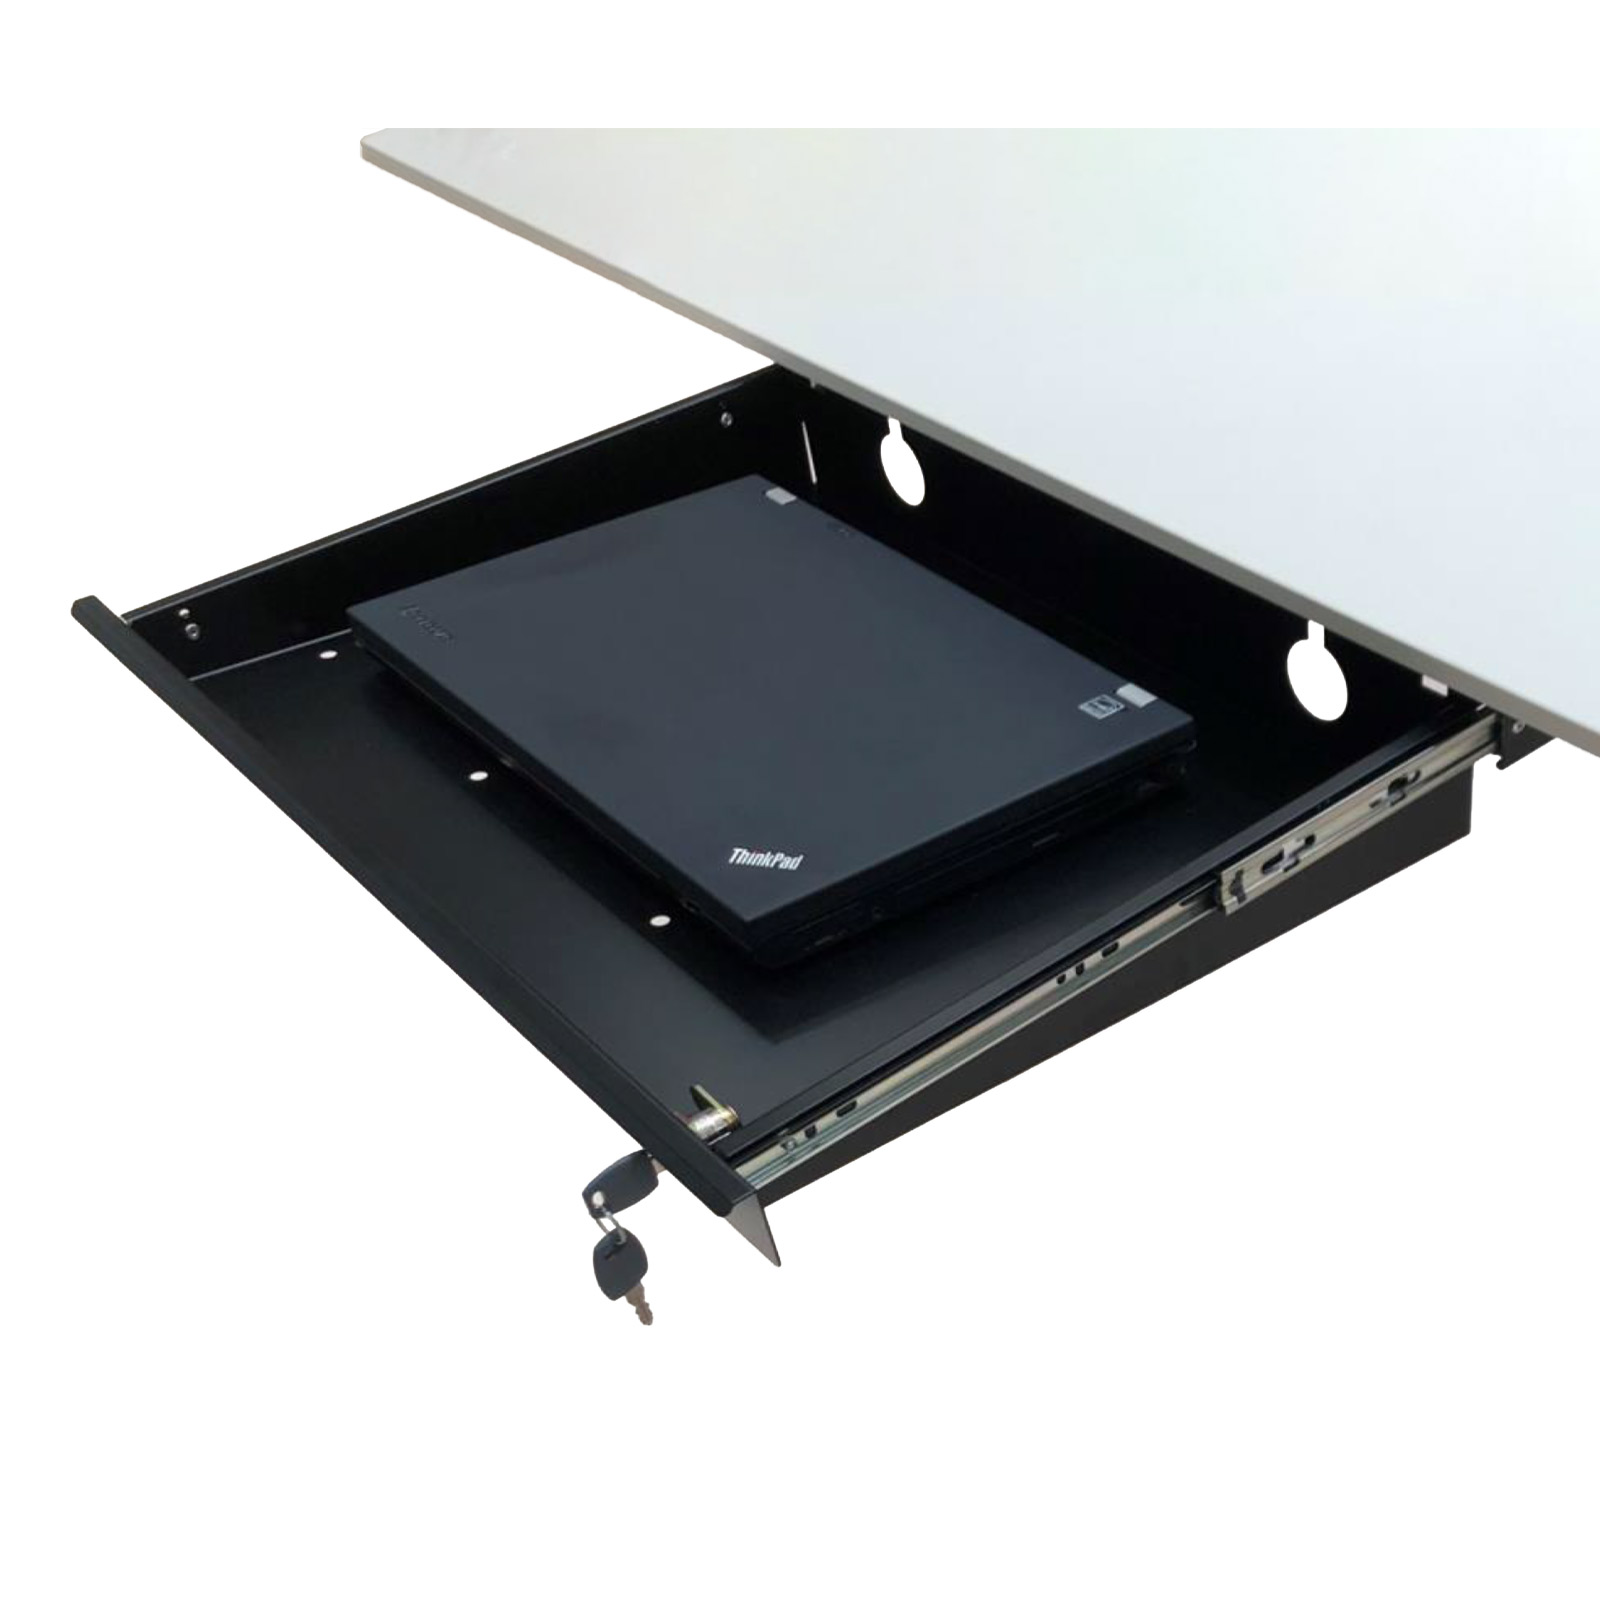 Anwendungsbild Eisnhauer Laptop Schublade abschließbar